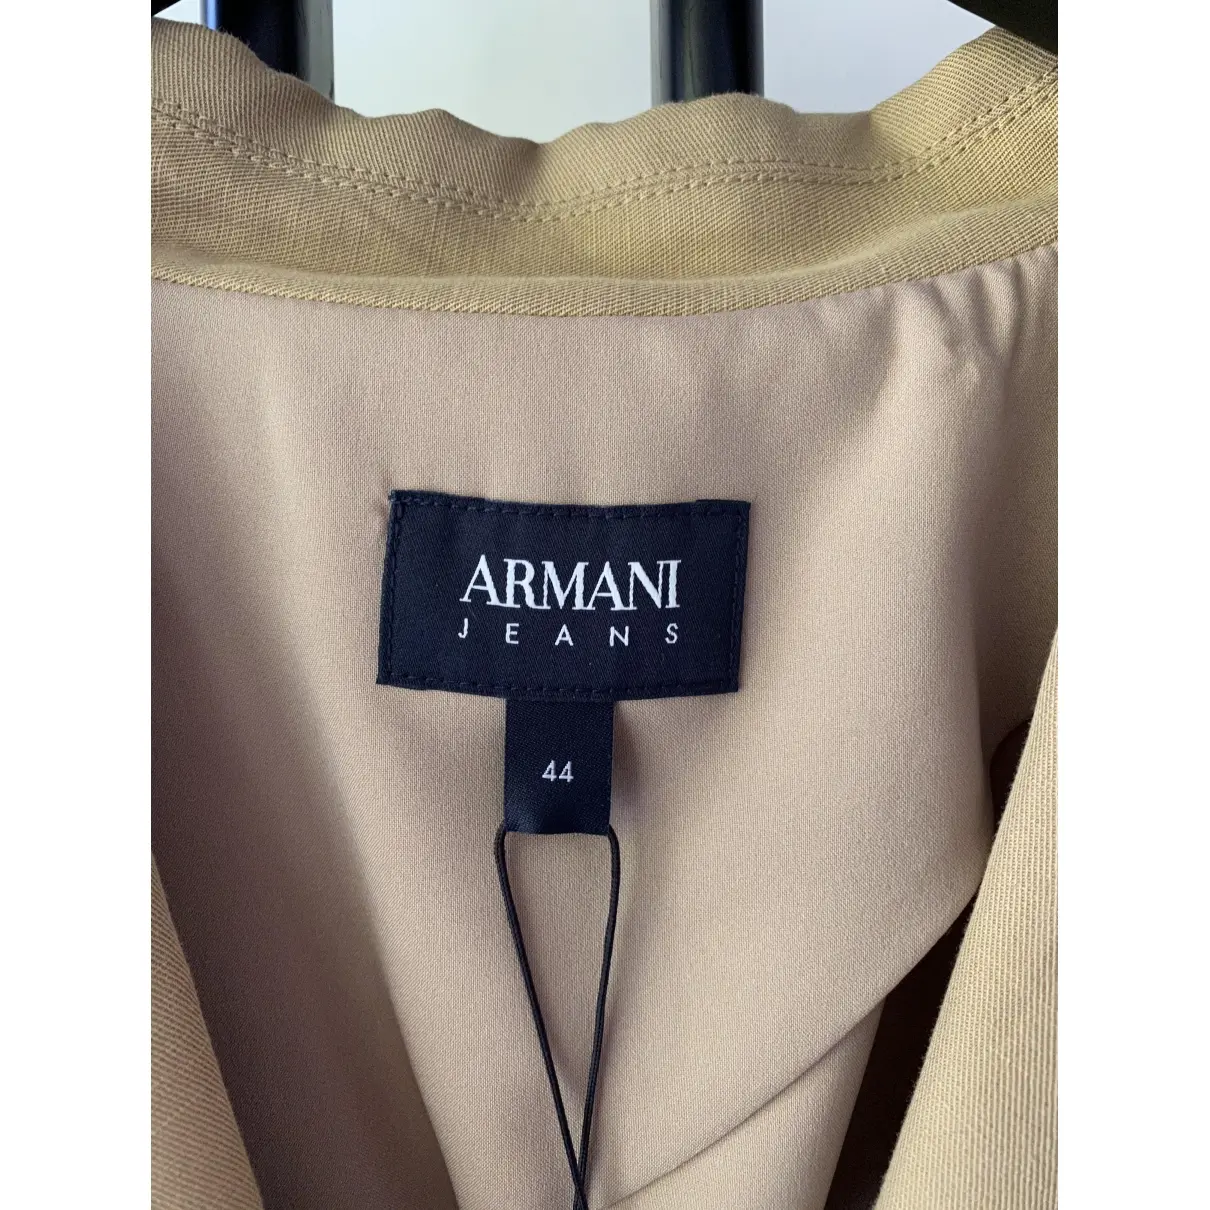 Buy Armani Jeans Beige Cotton Jacket online